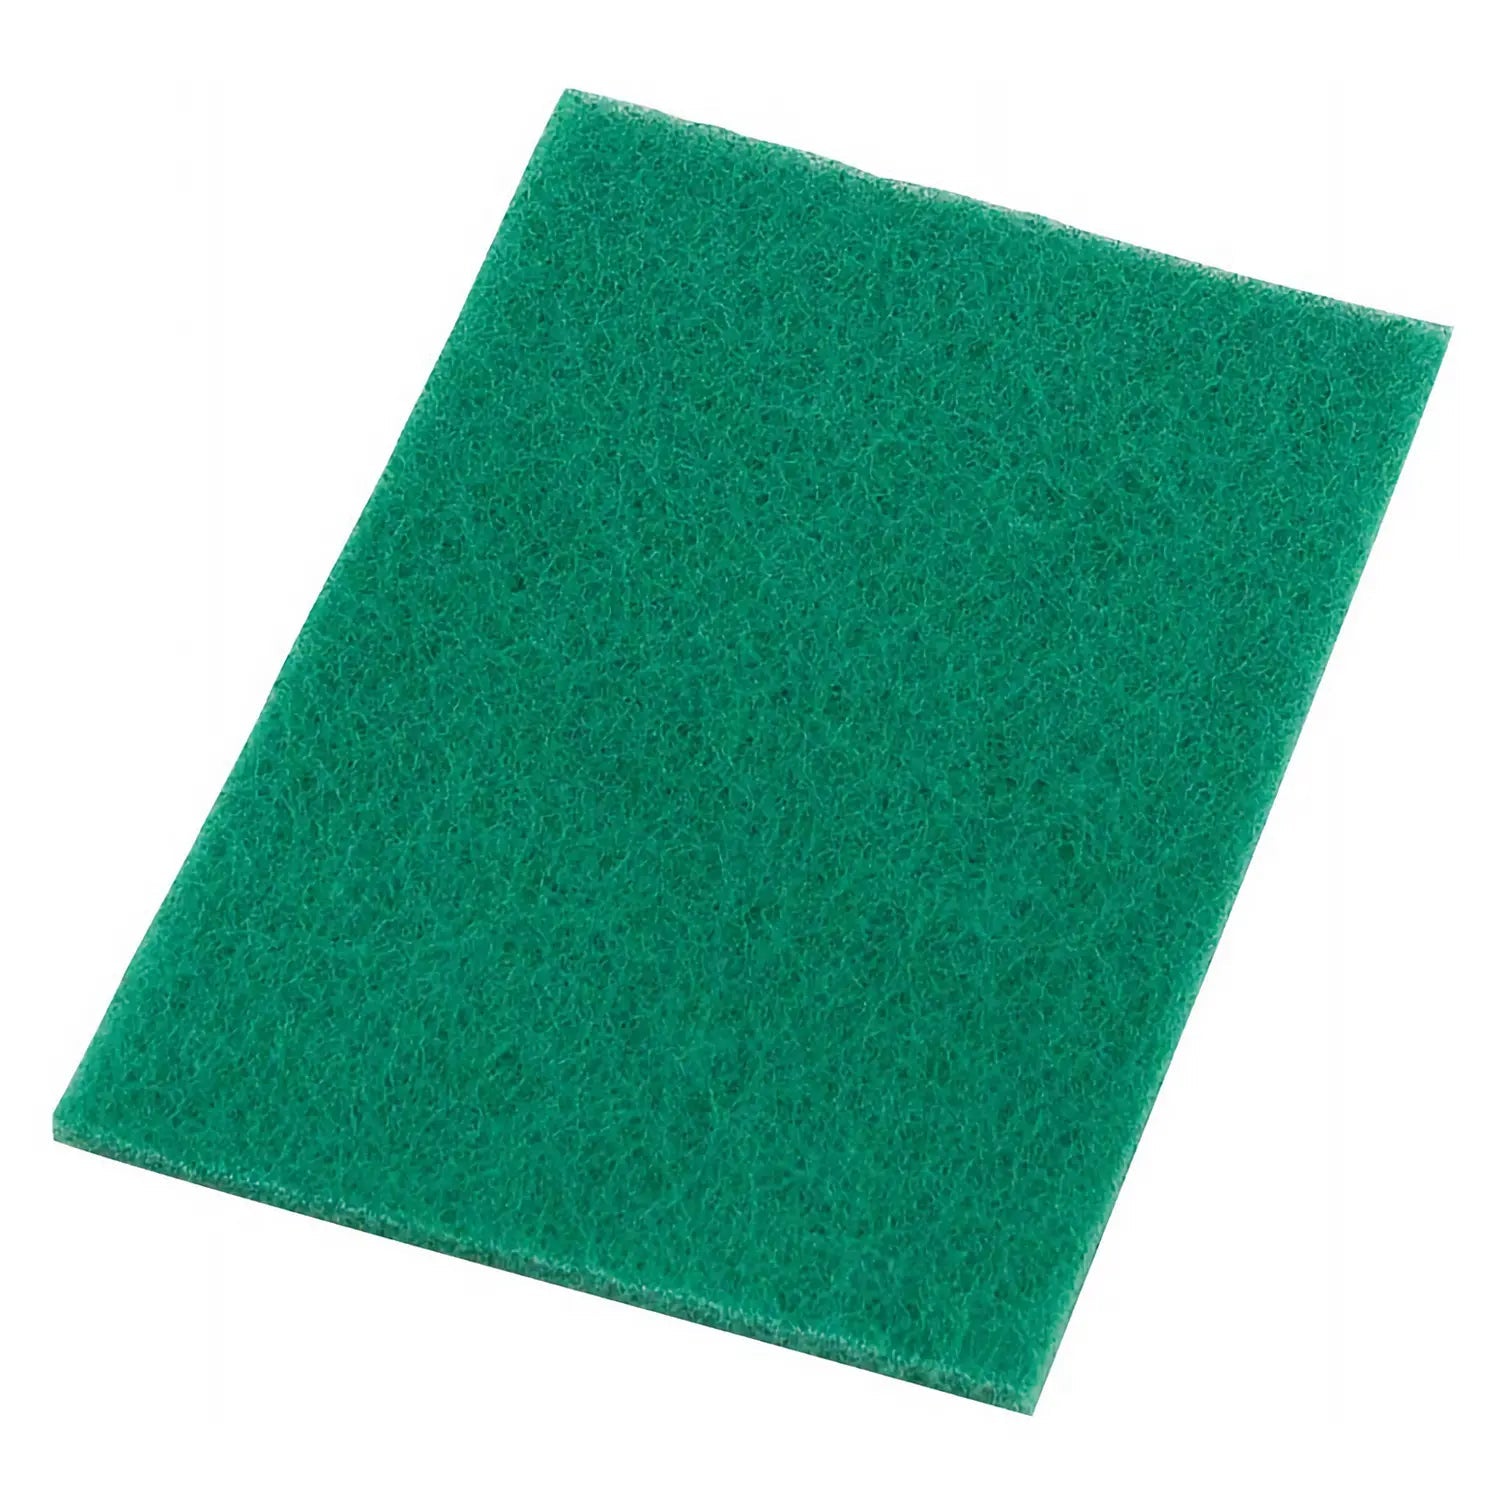 Scotch-Brite Green Nylon Non-Woven Fabric Scrubbing Scour - Effective Cleaning Solution